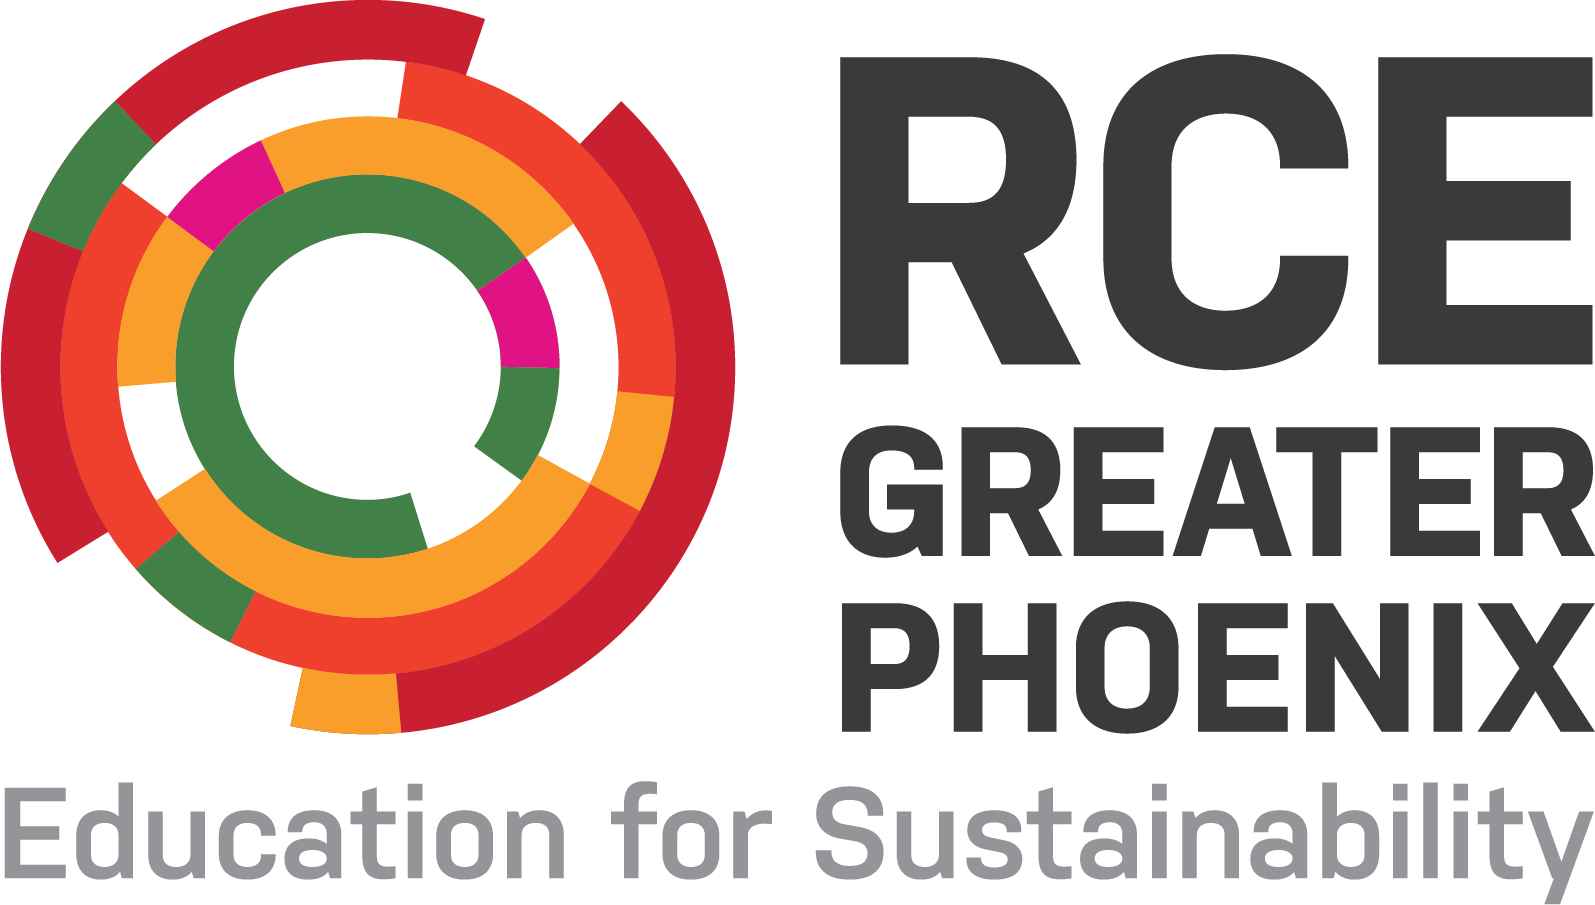 RCE Greater Phoenix, Education Through Sustainability